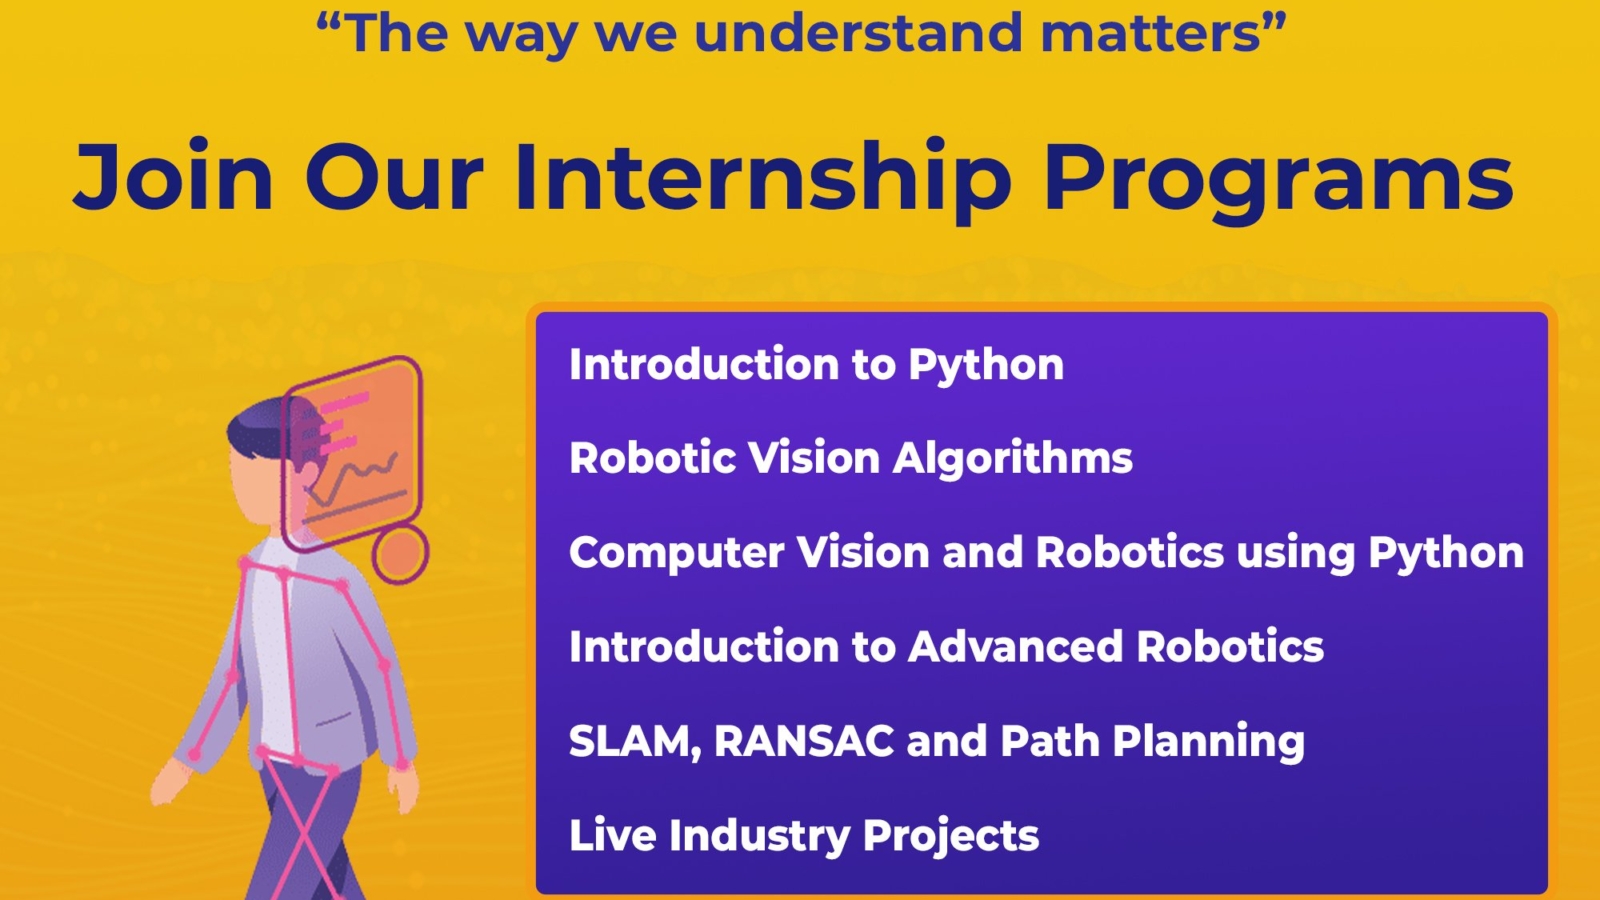 ChaloExam Internship programs in Robotics and Computer Vision